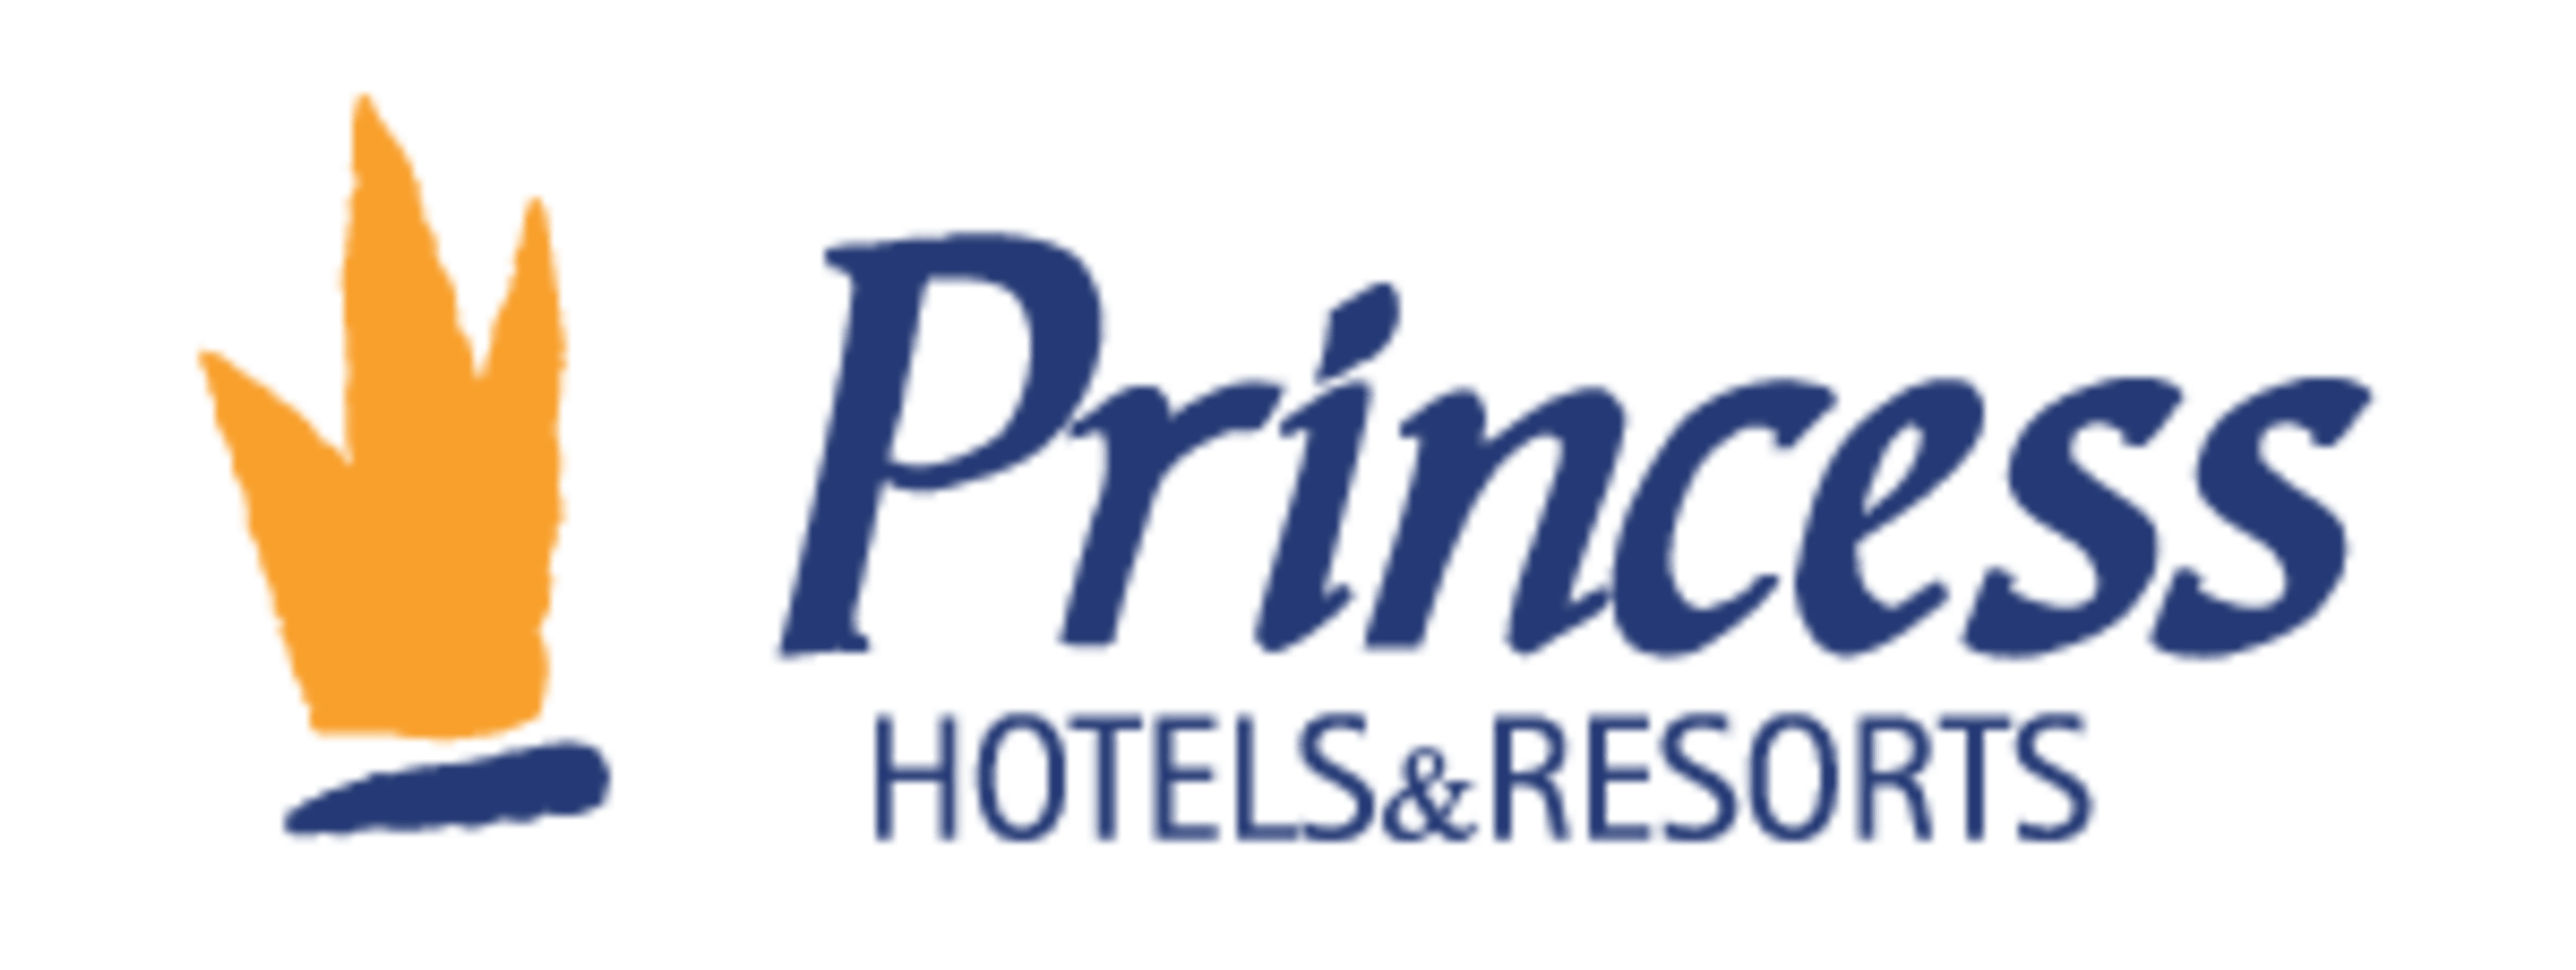 Princess Hotels and ResortsCode